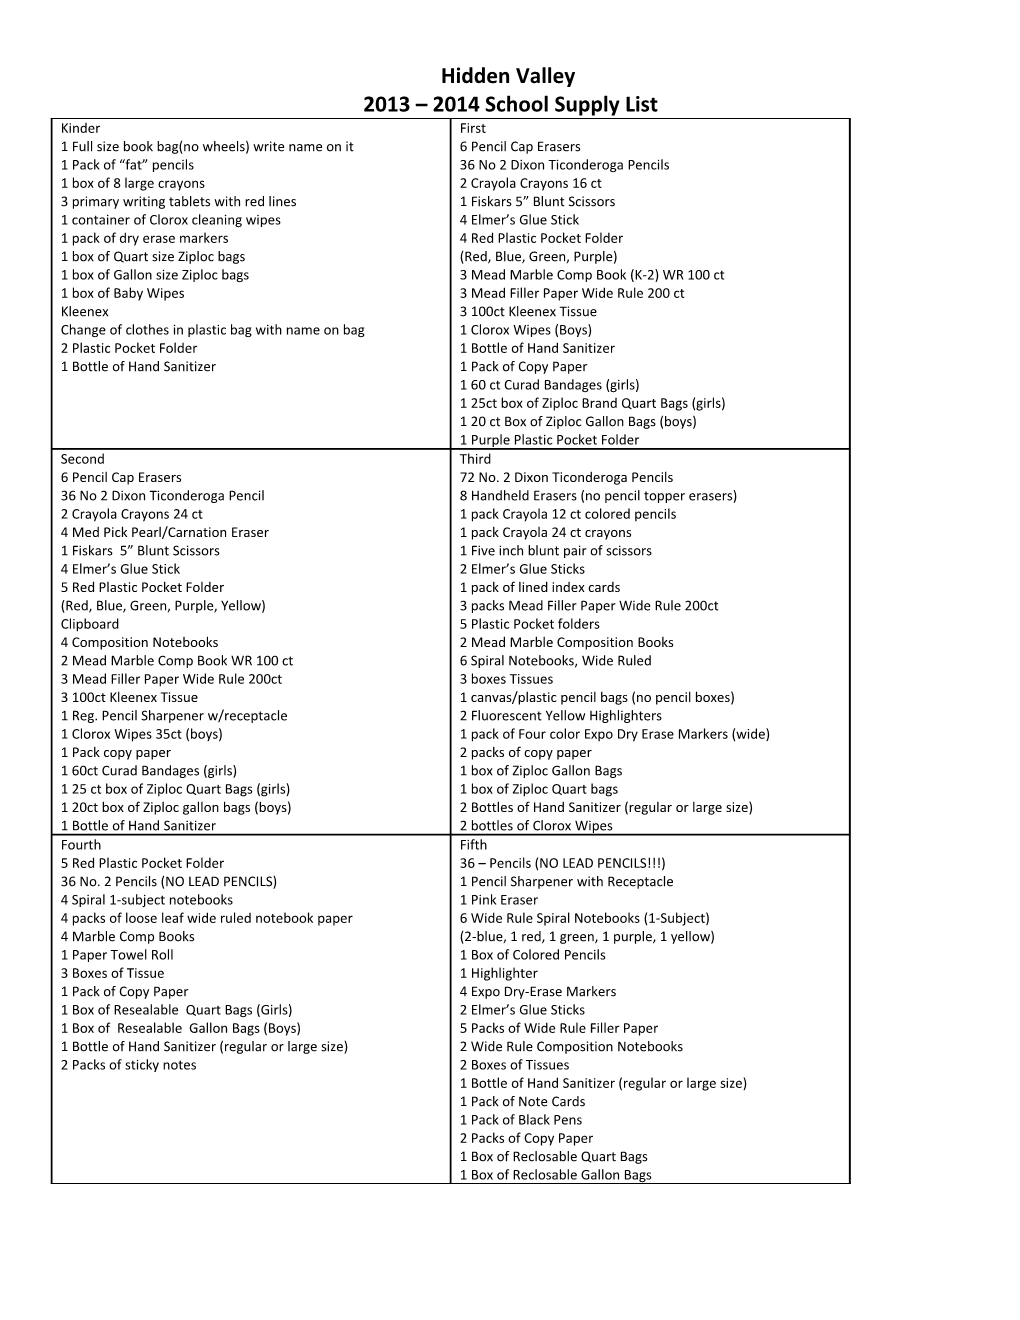 School Supply List 2013